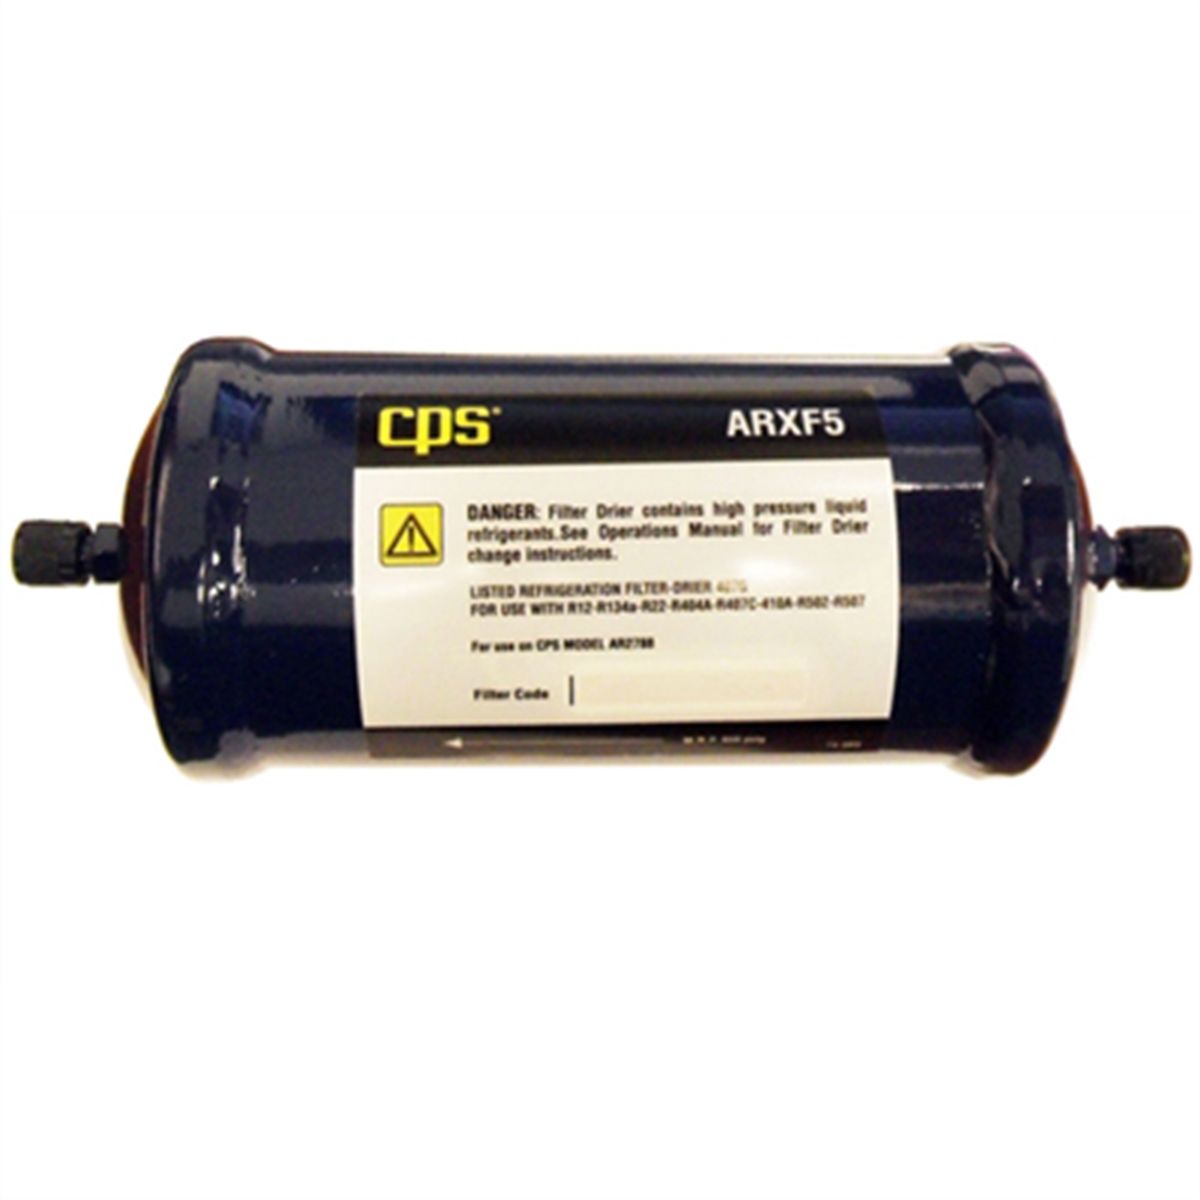 Filter For Ar2788 Ar2788b Ar2788e Cps Products Arxf5